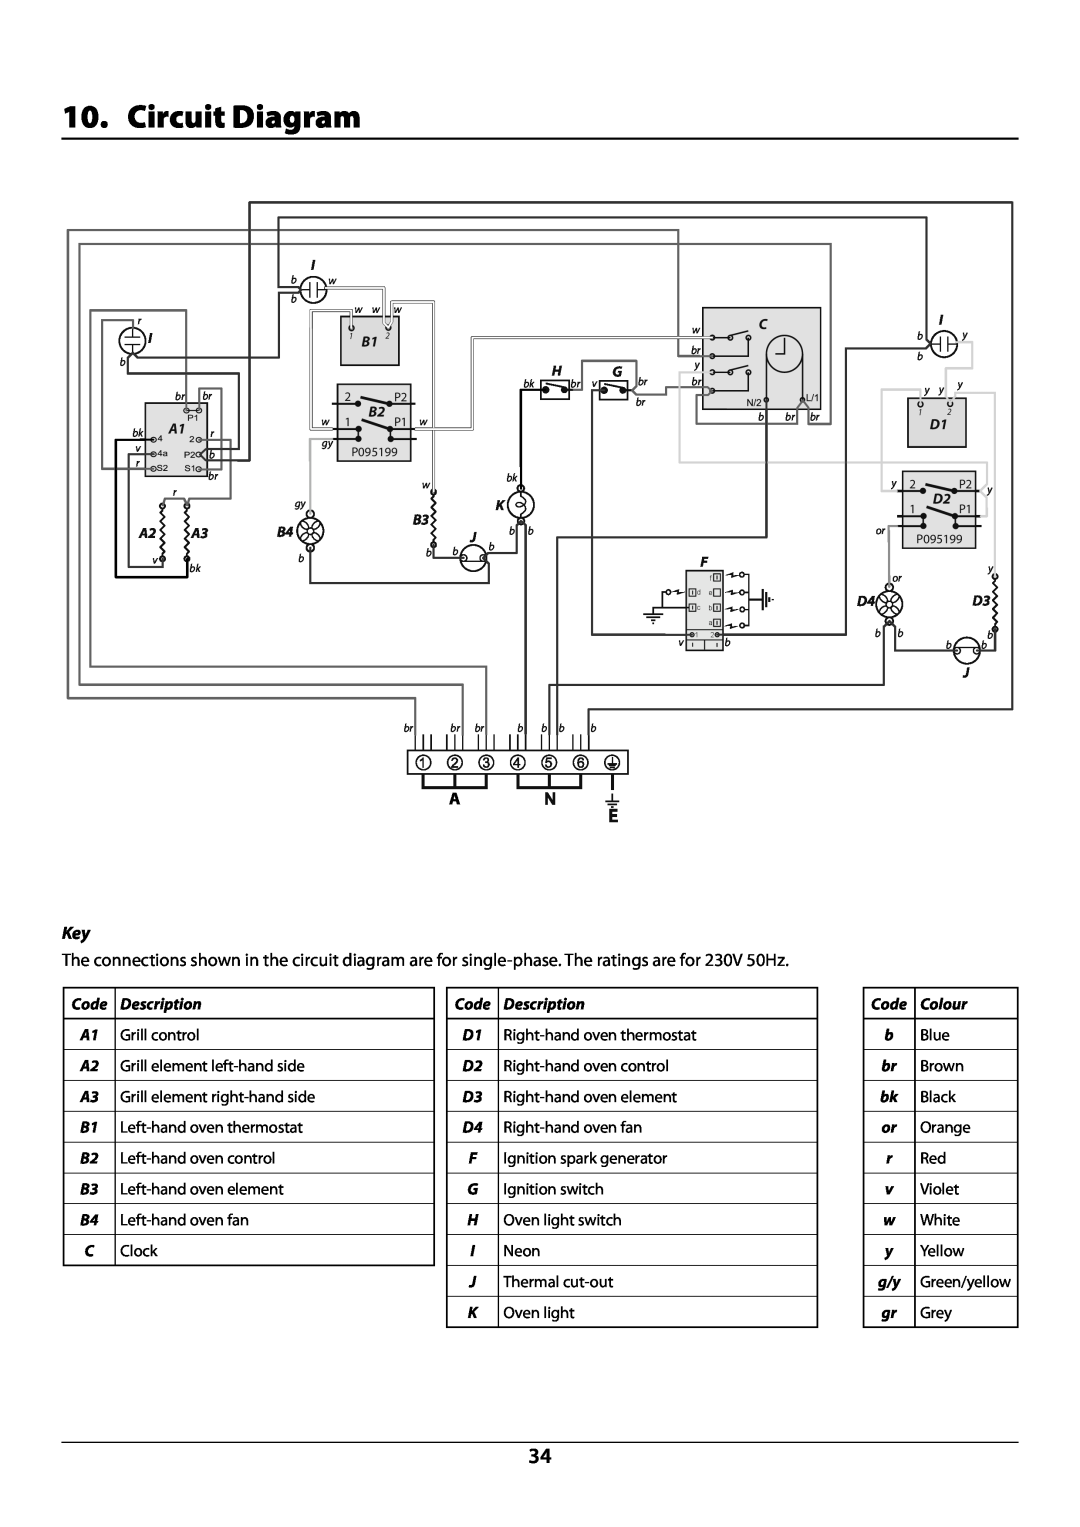 Falcon U108610-07 installation instructions Circuit Diagram, Description, Colour 